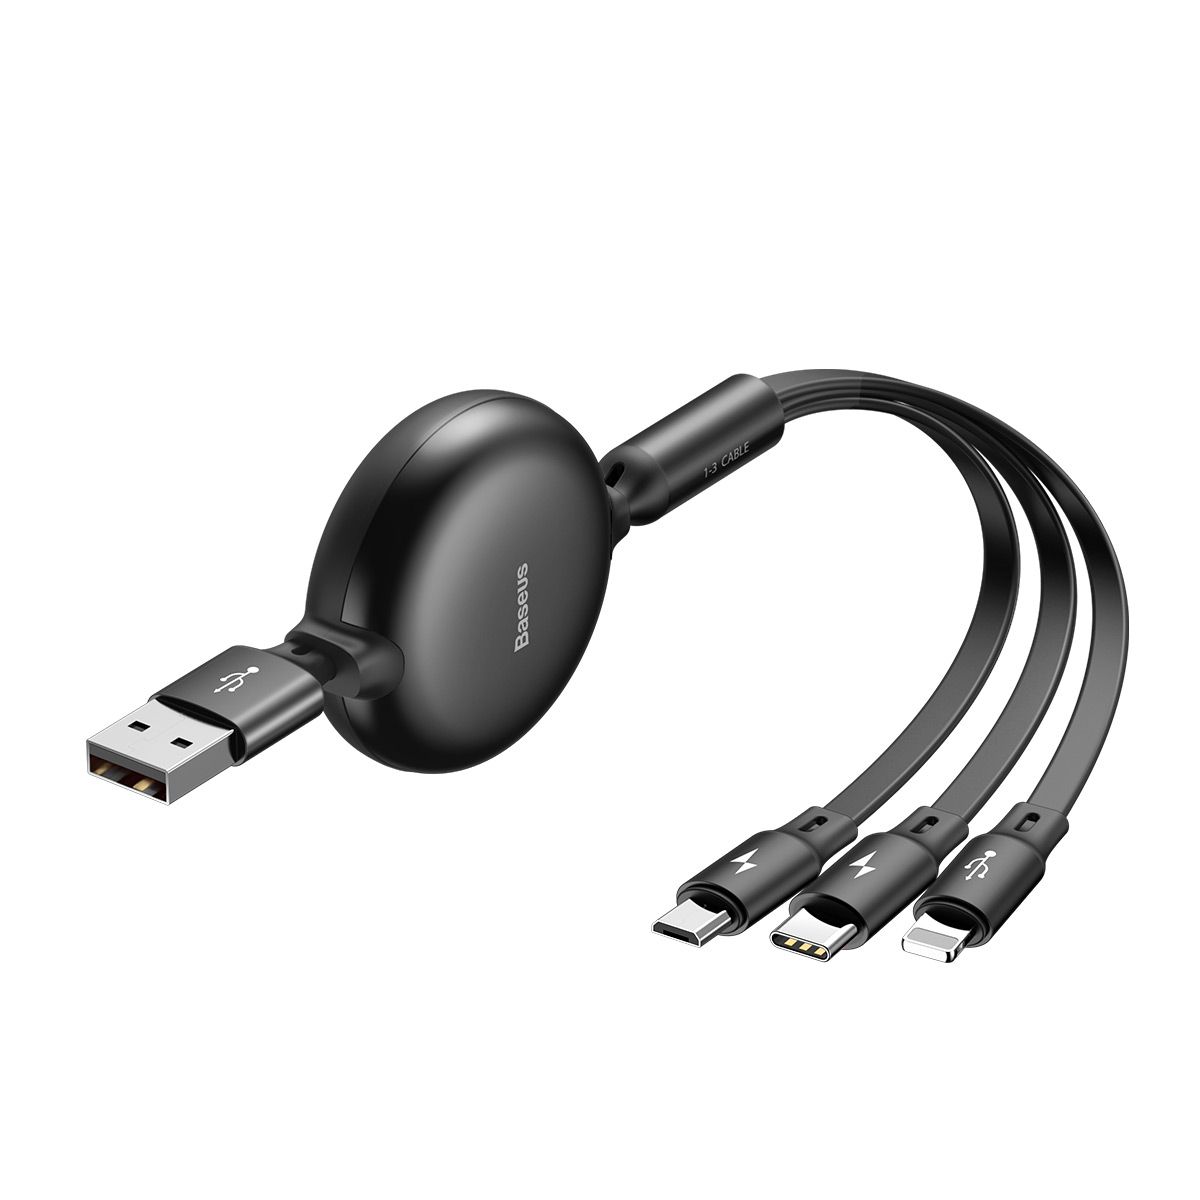 Cabo 3n1 Baseus Little Octopus  - USB para Micro USB / Lightning / Type-C 3.5A e 1.2m